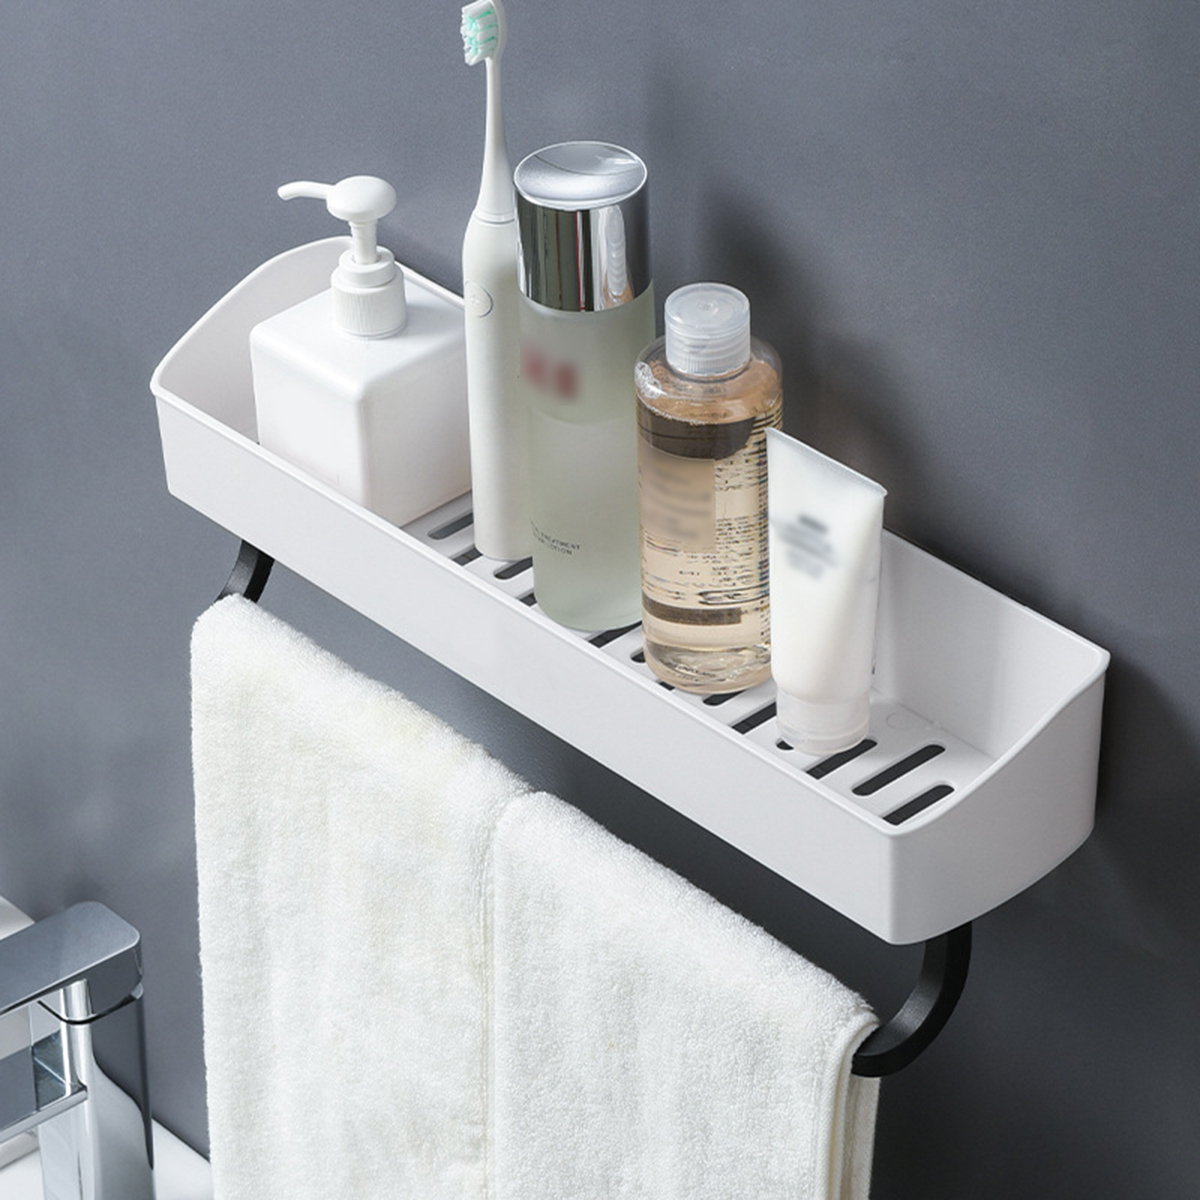 Bathroom-Wall-Mounted-Kitchen-Storage-Rack-Towel-Shelf-Organizer-Shower-Shampoo-Holder-1663521-6